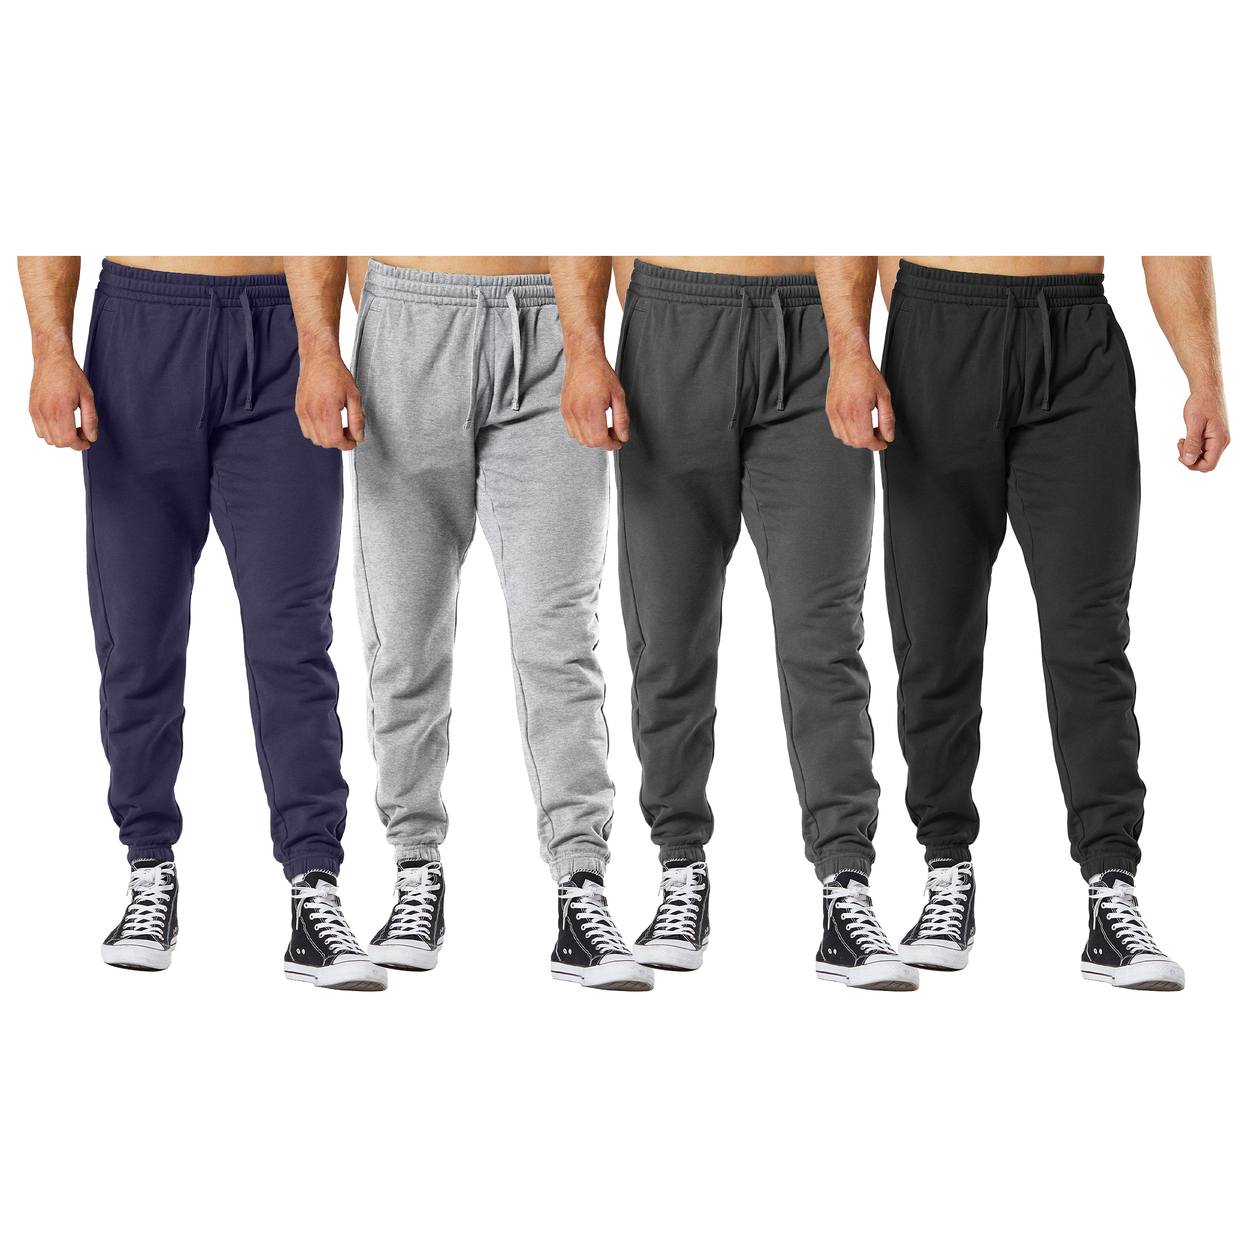 Men's Ultra-Soft Cozy Winter Warm Casual Fleece Lined Sweatpants Jogger - Grey, Small